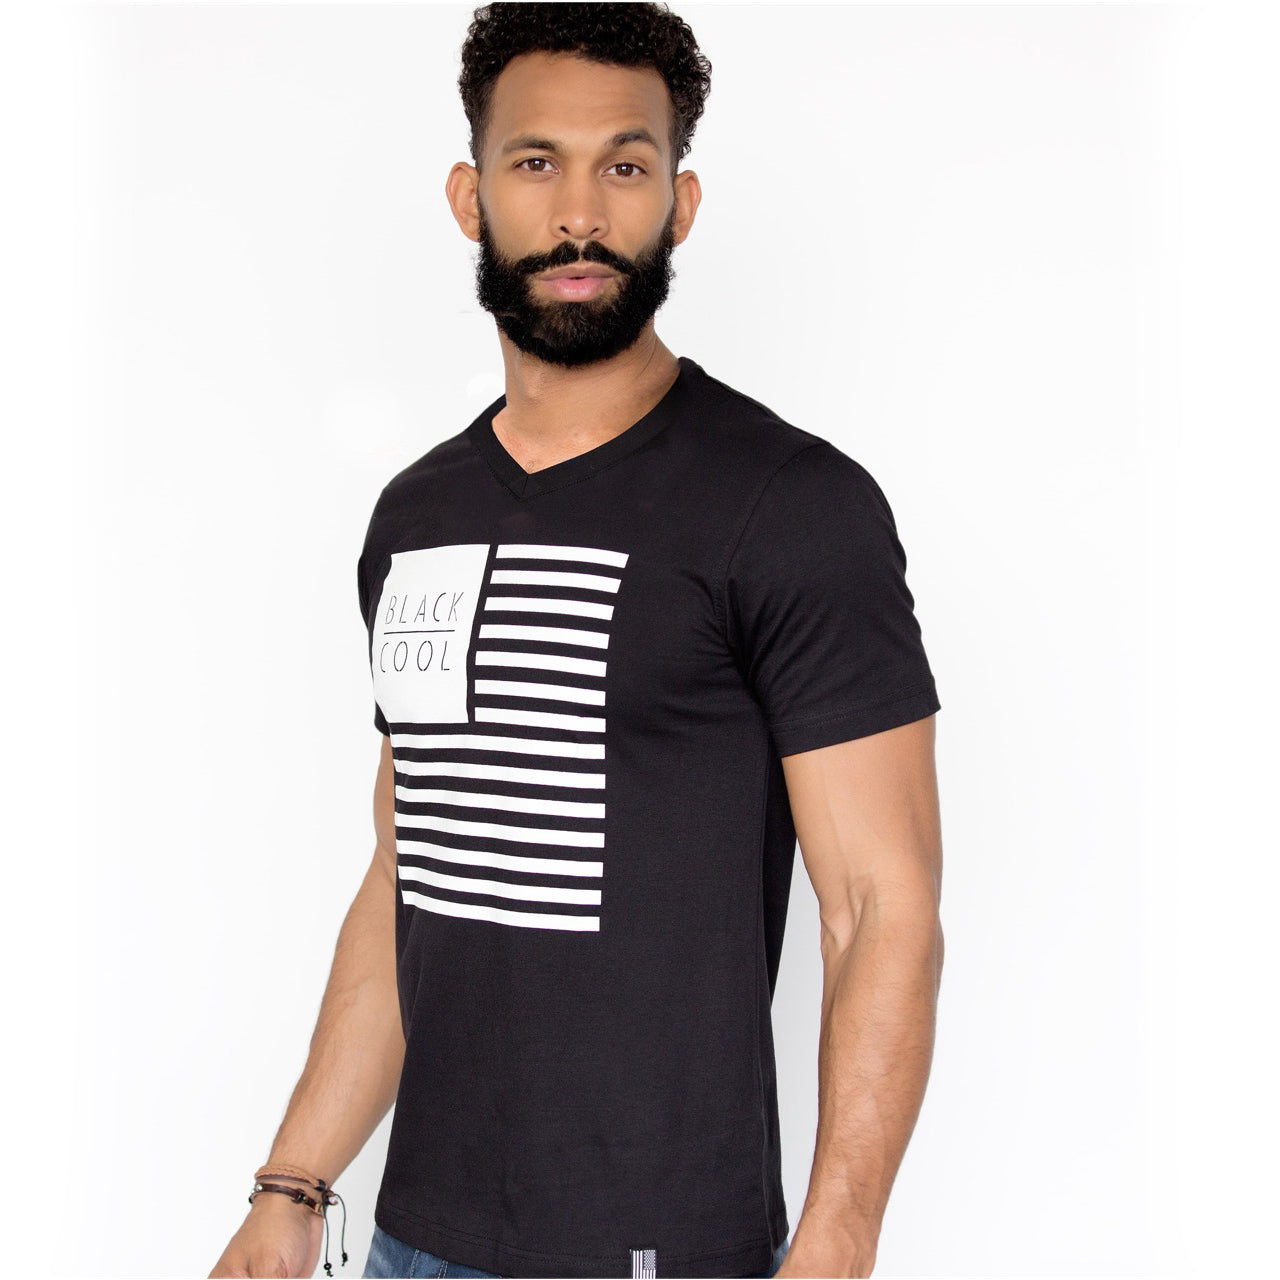 BlackCool - Renaissance T-Shirt - Ultra Premium Apparel & Accessories